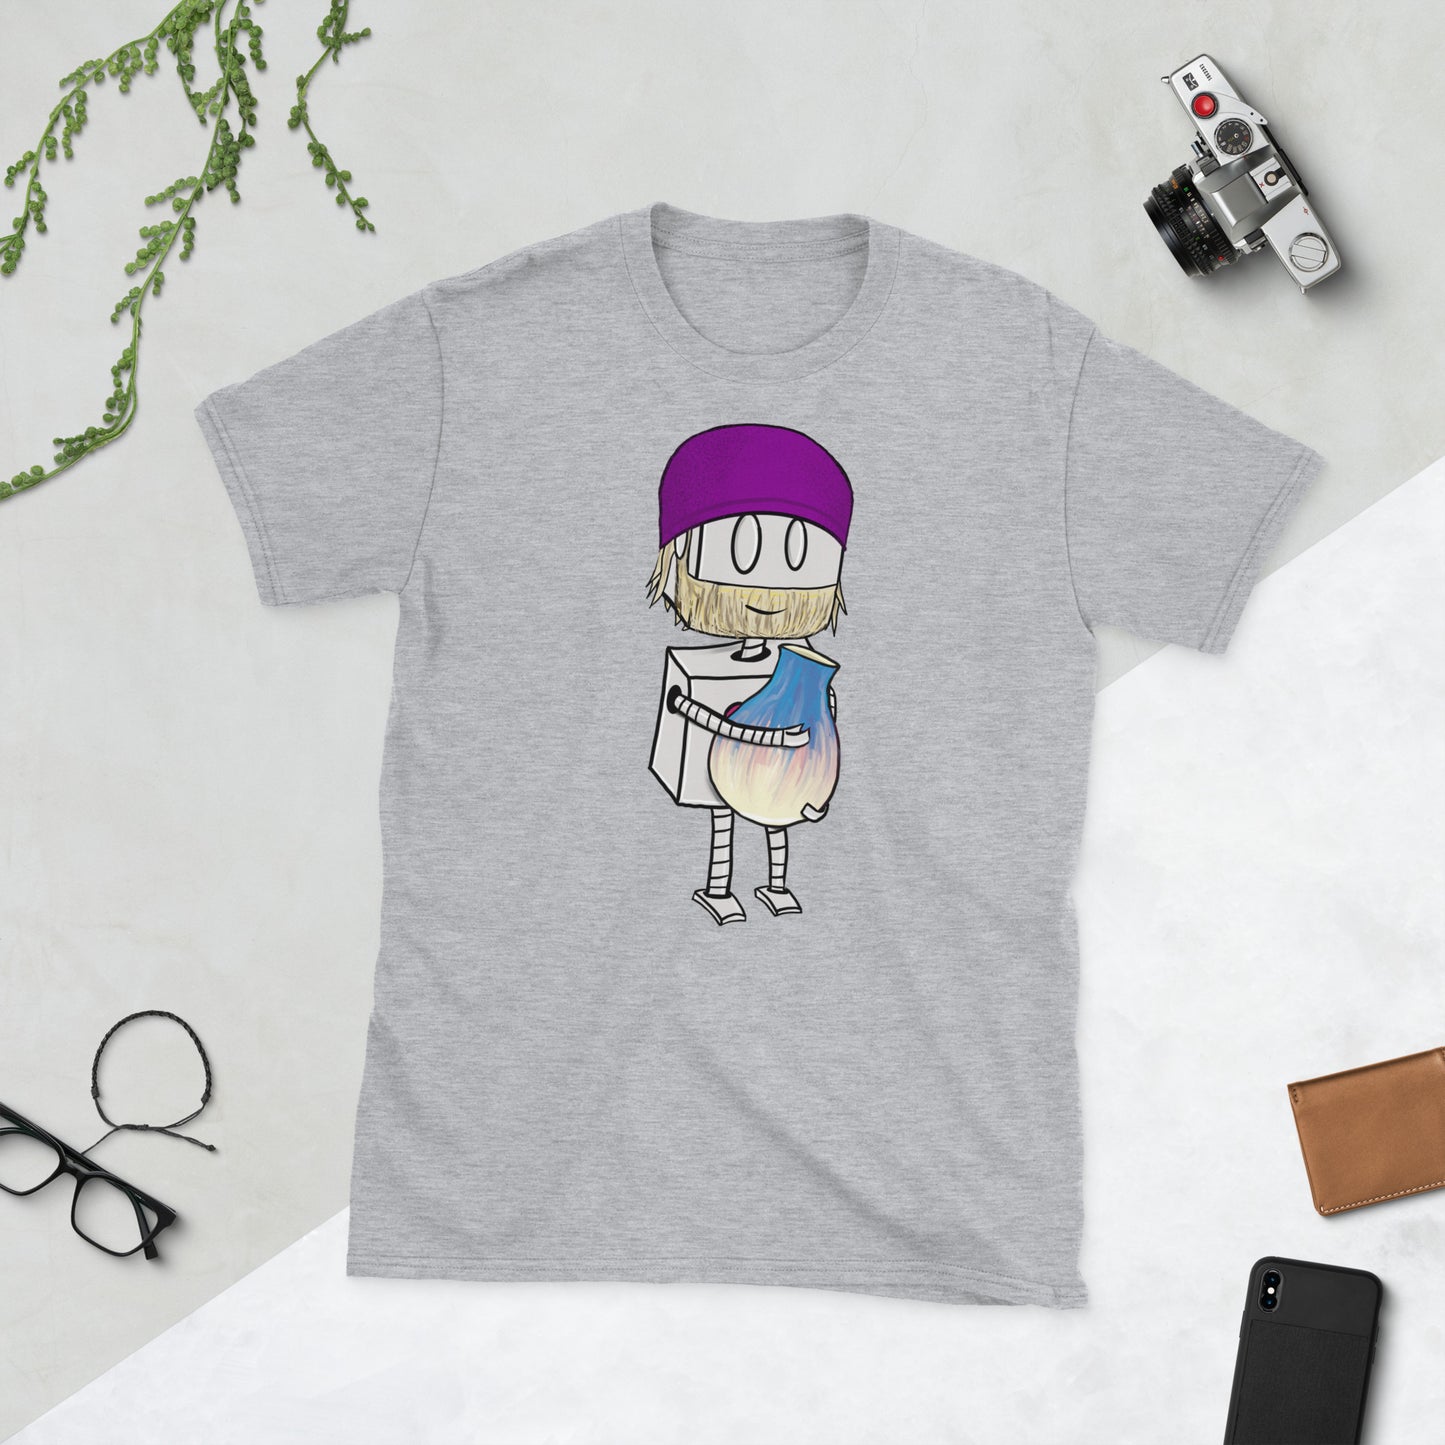 "Adorable Robot" Premium T-Shirt (Bearded Potter with Beanie Version) - Unisex